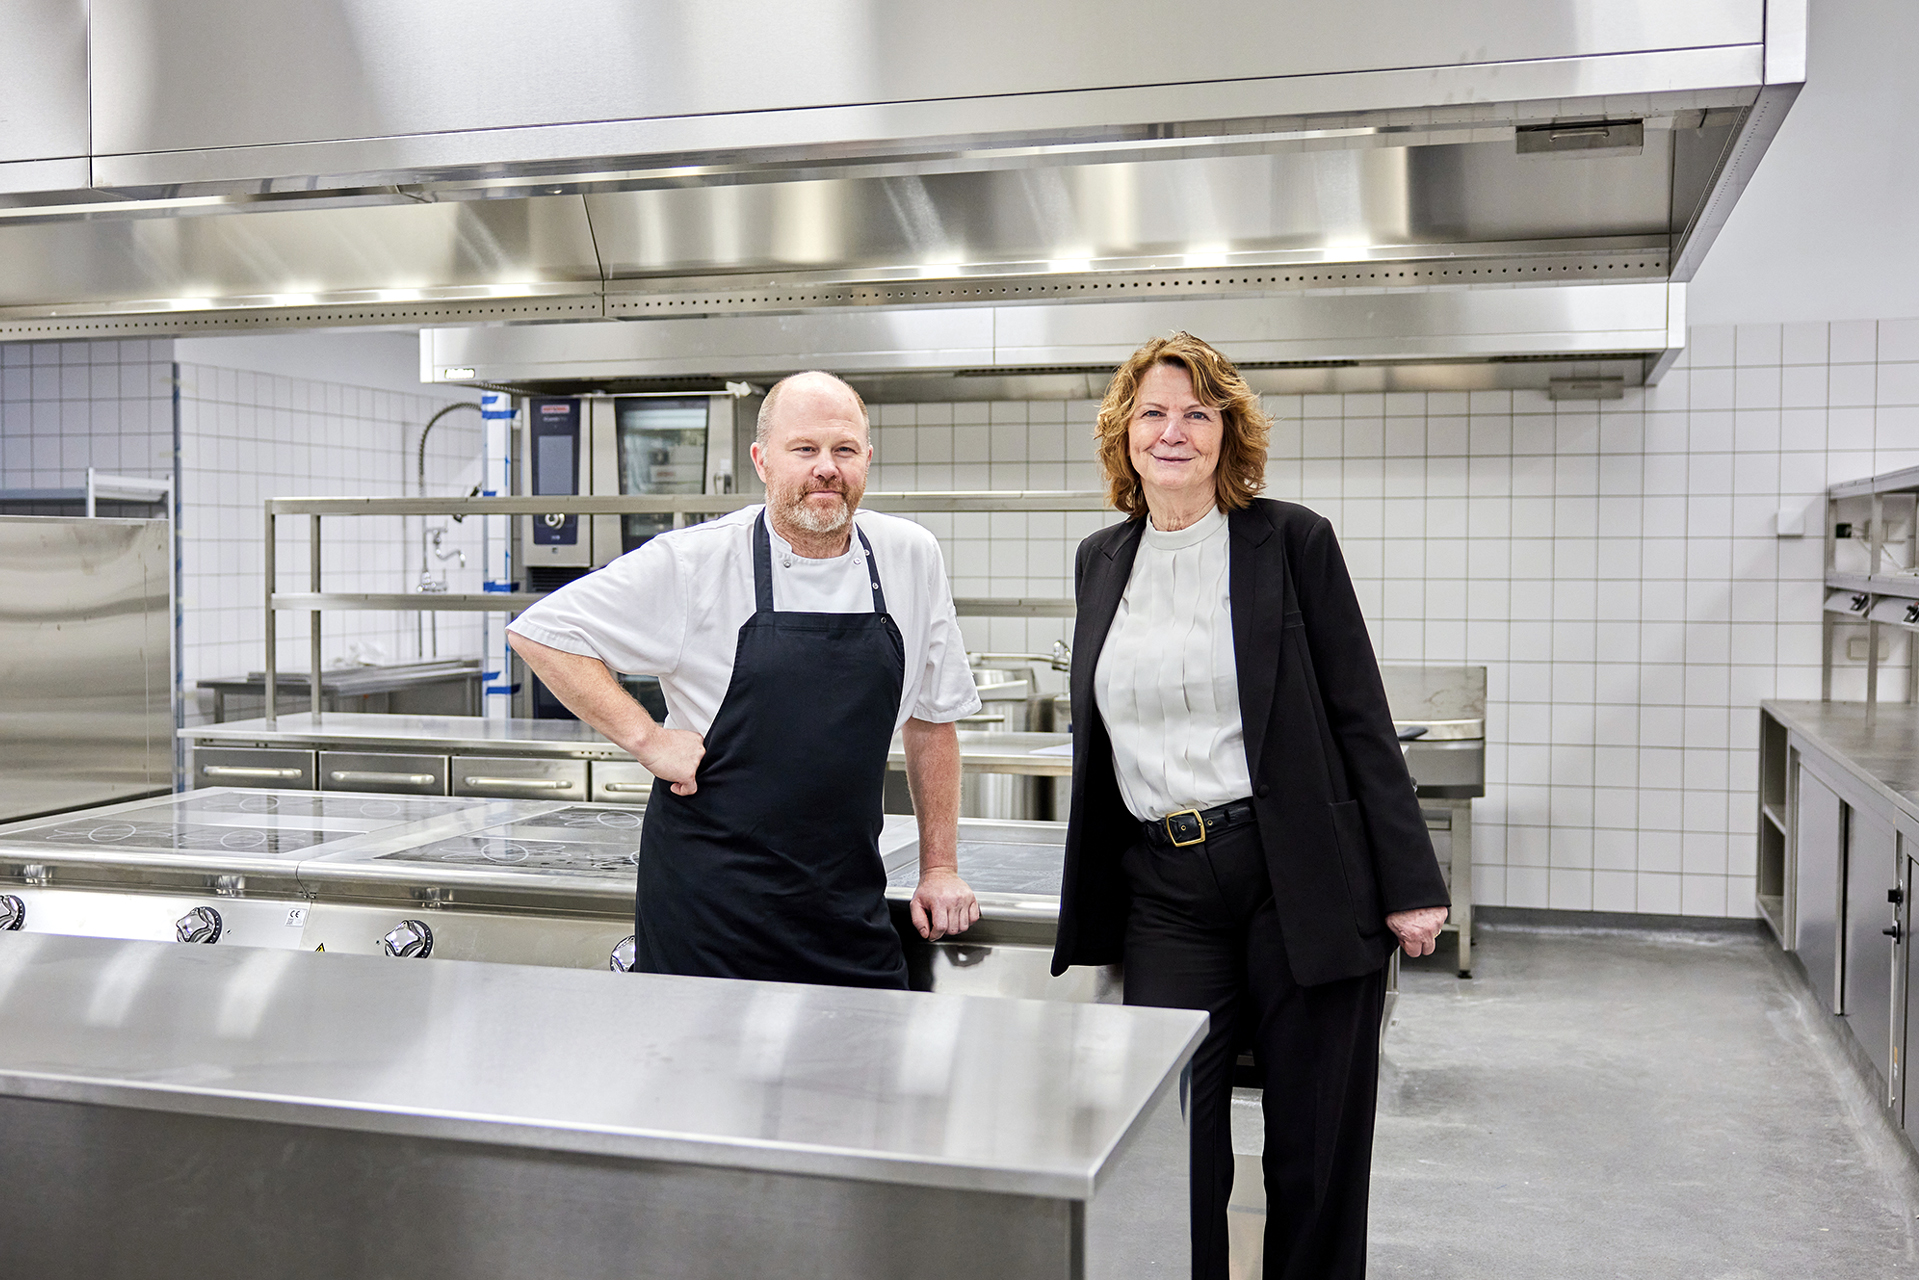 Køkkenchef Peter Brandt Møller og hoteldirektør Rikke Gandrup fra Color Hotel Skagen.